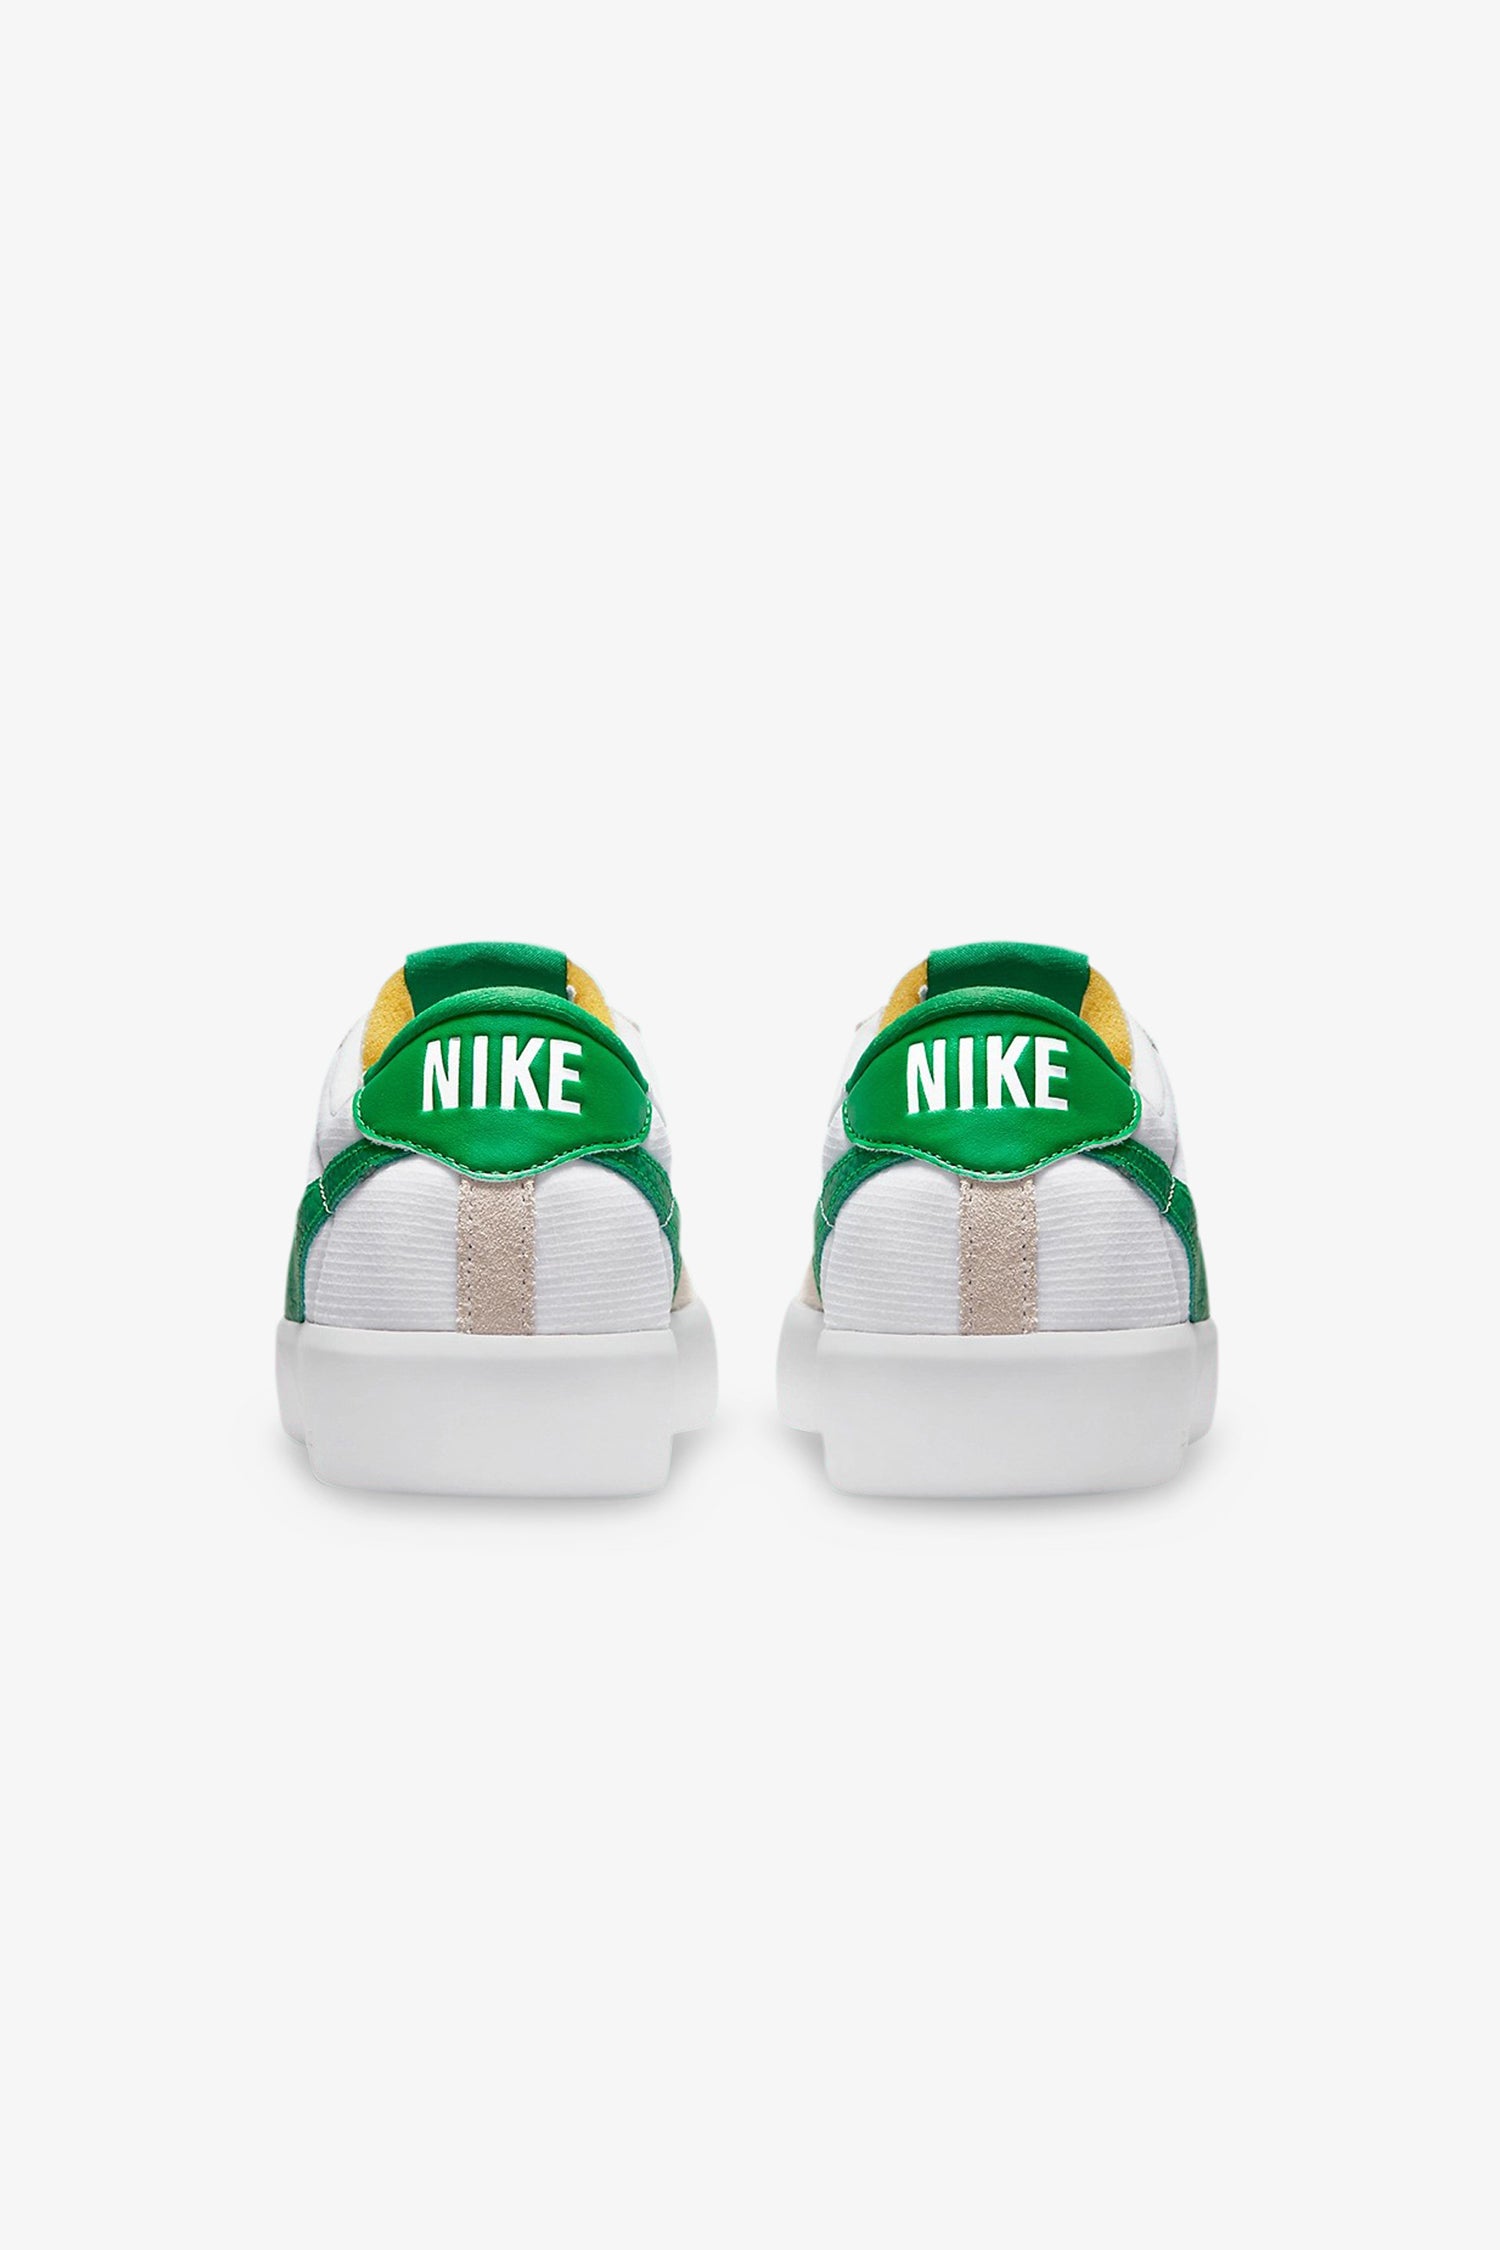 Selectshop FRAME - NIKE SB Bruin React "Lucky Green" Footwear Dubai